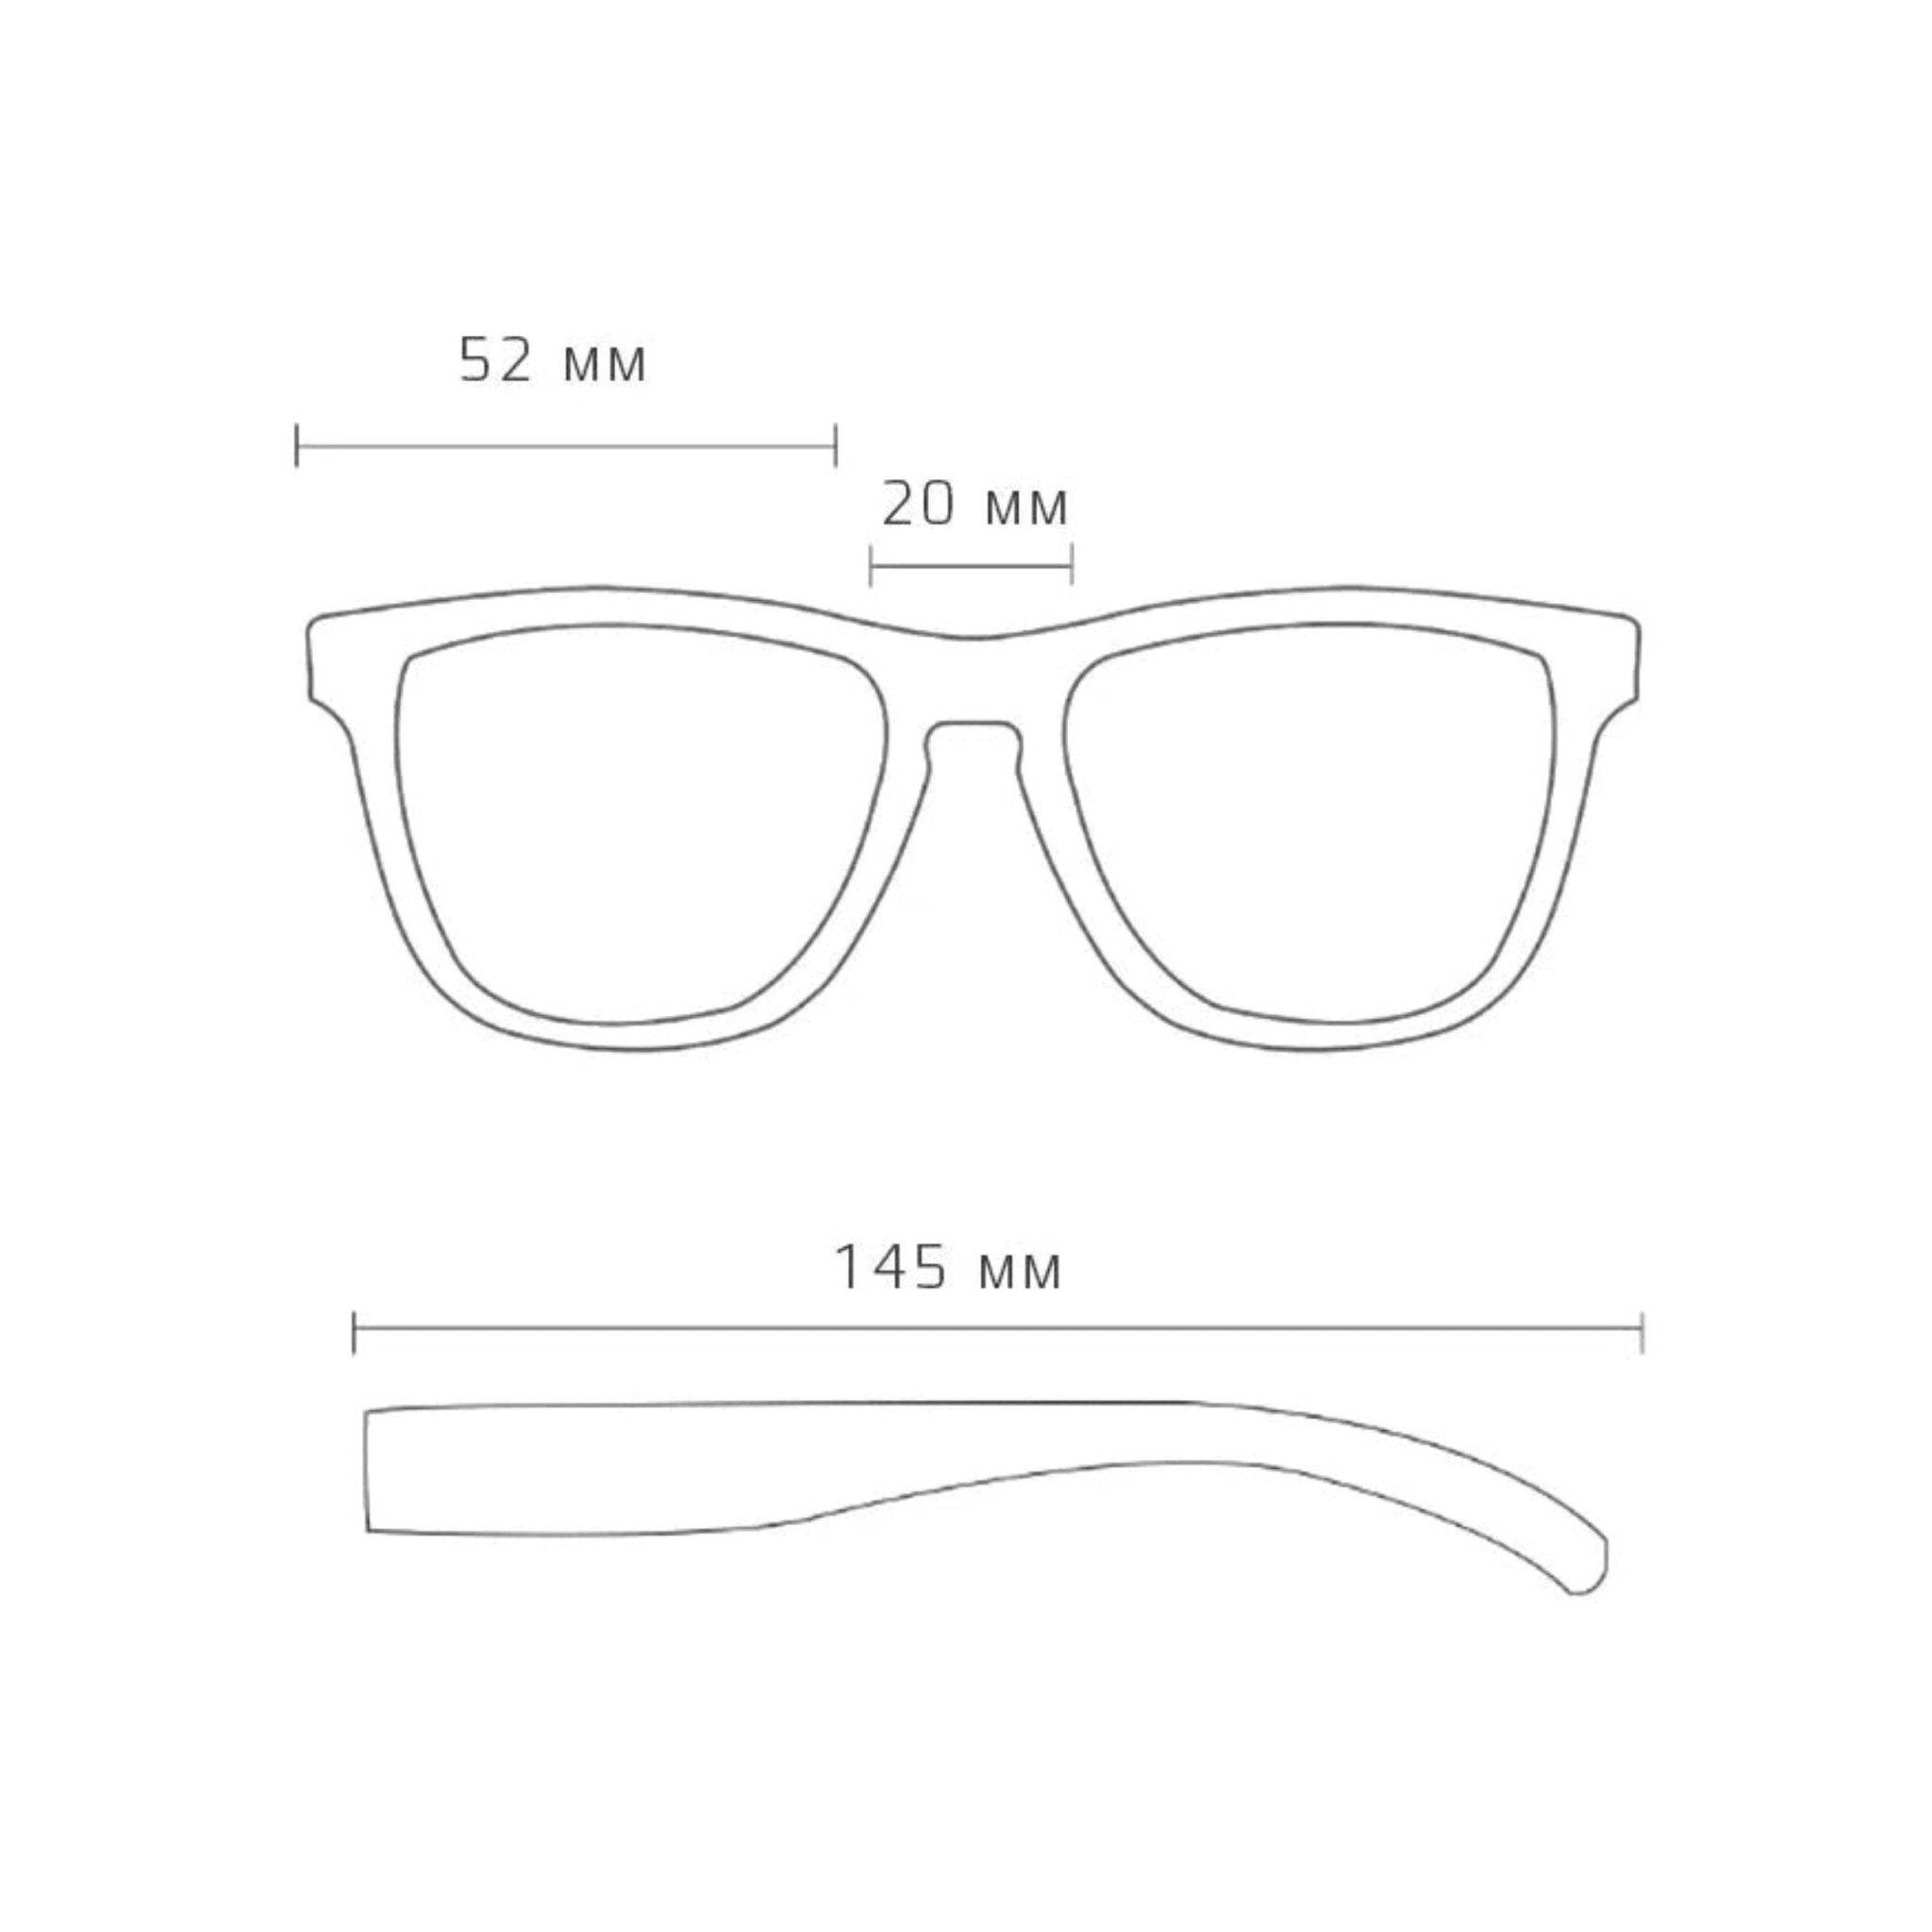 Xiaomi Turok Steinhardt Traveler Sunglasses - Black